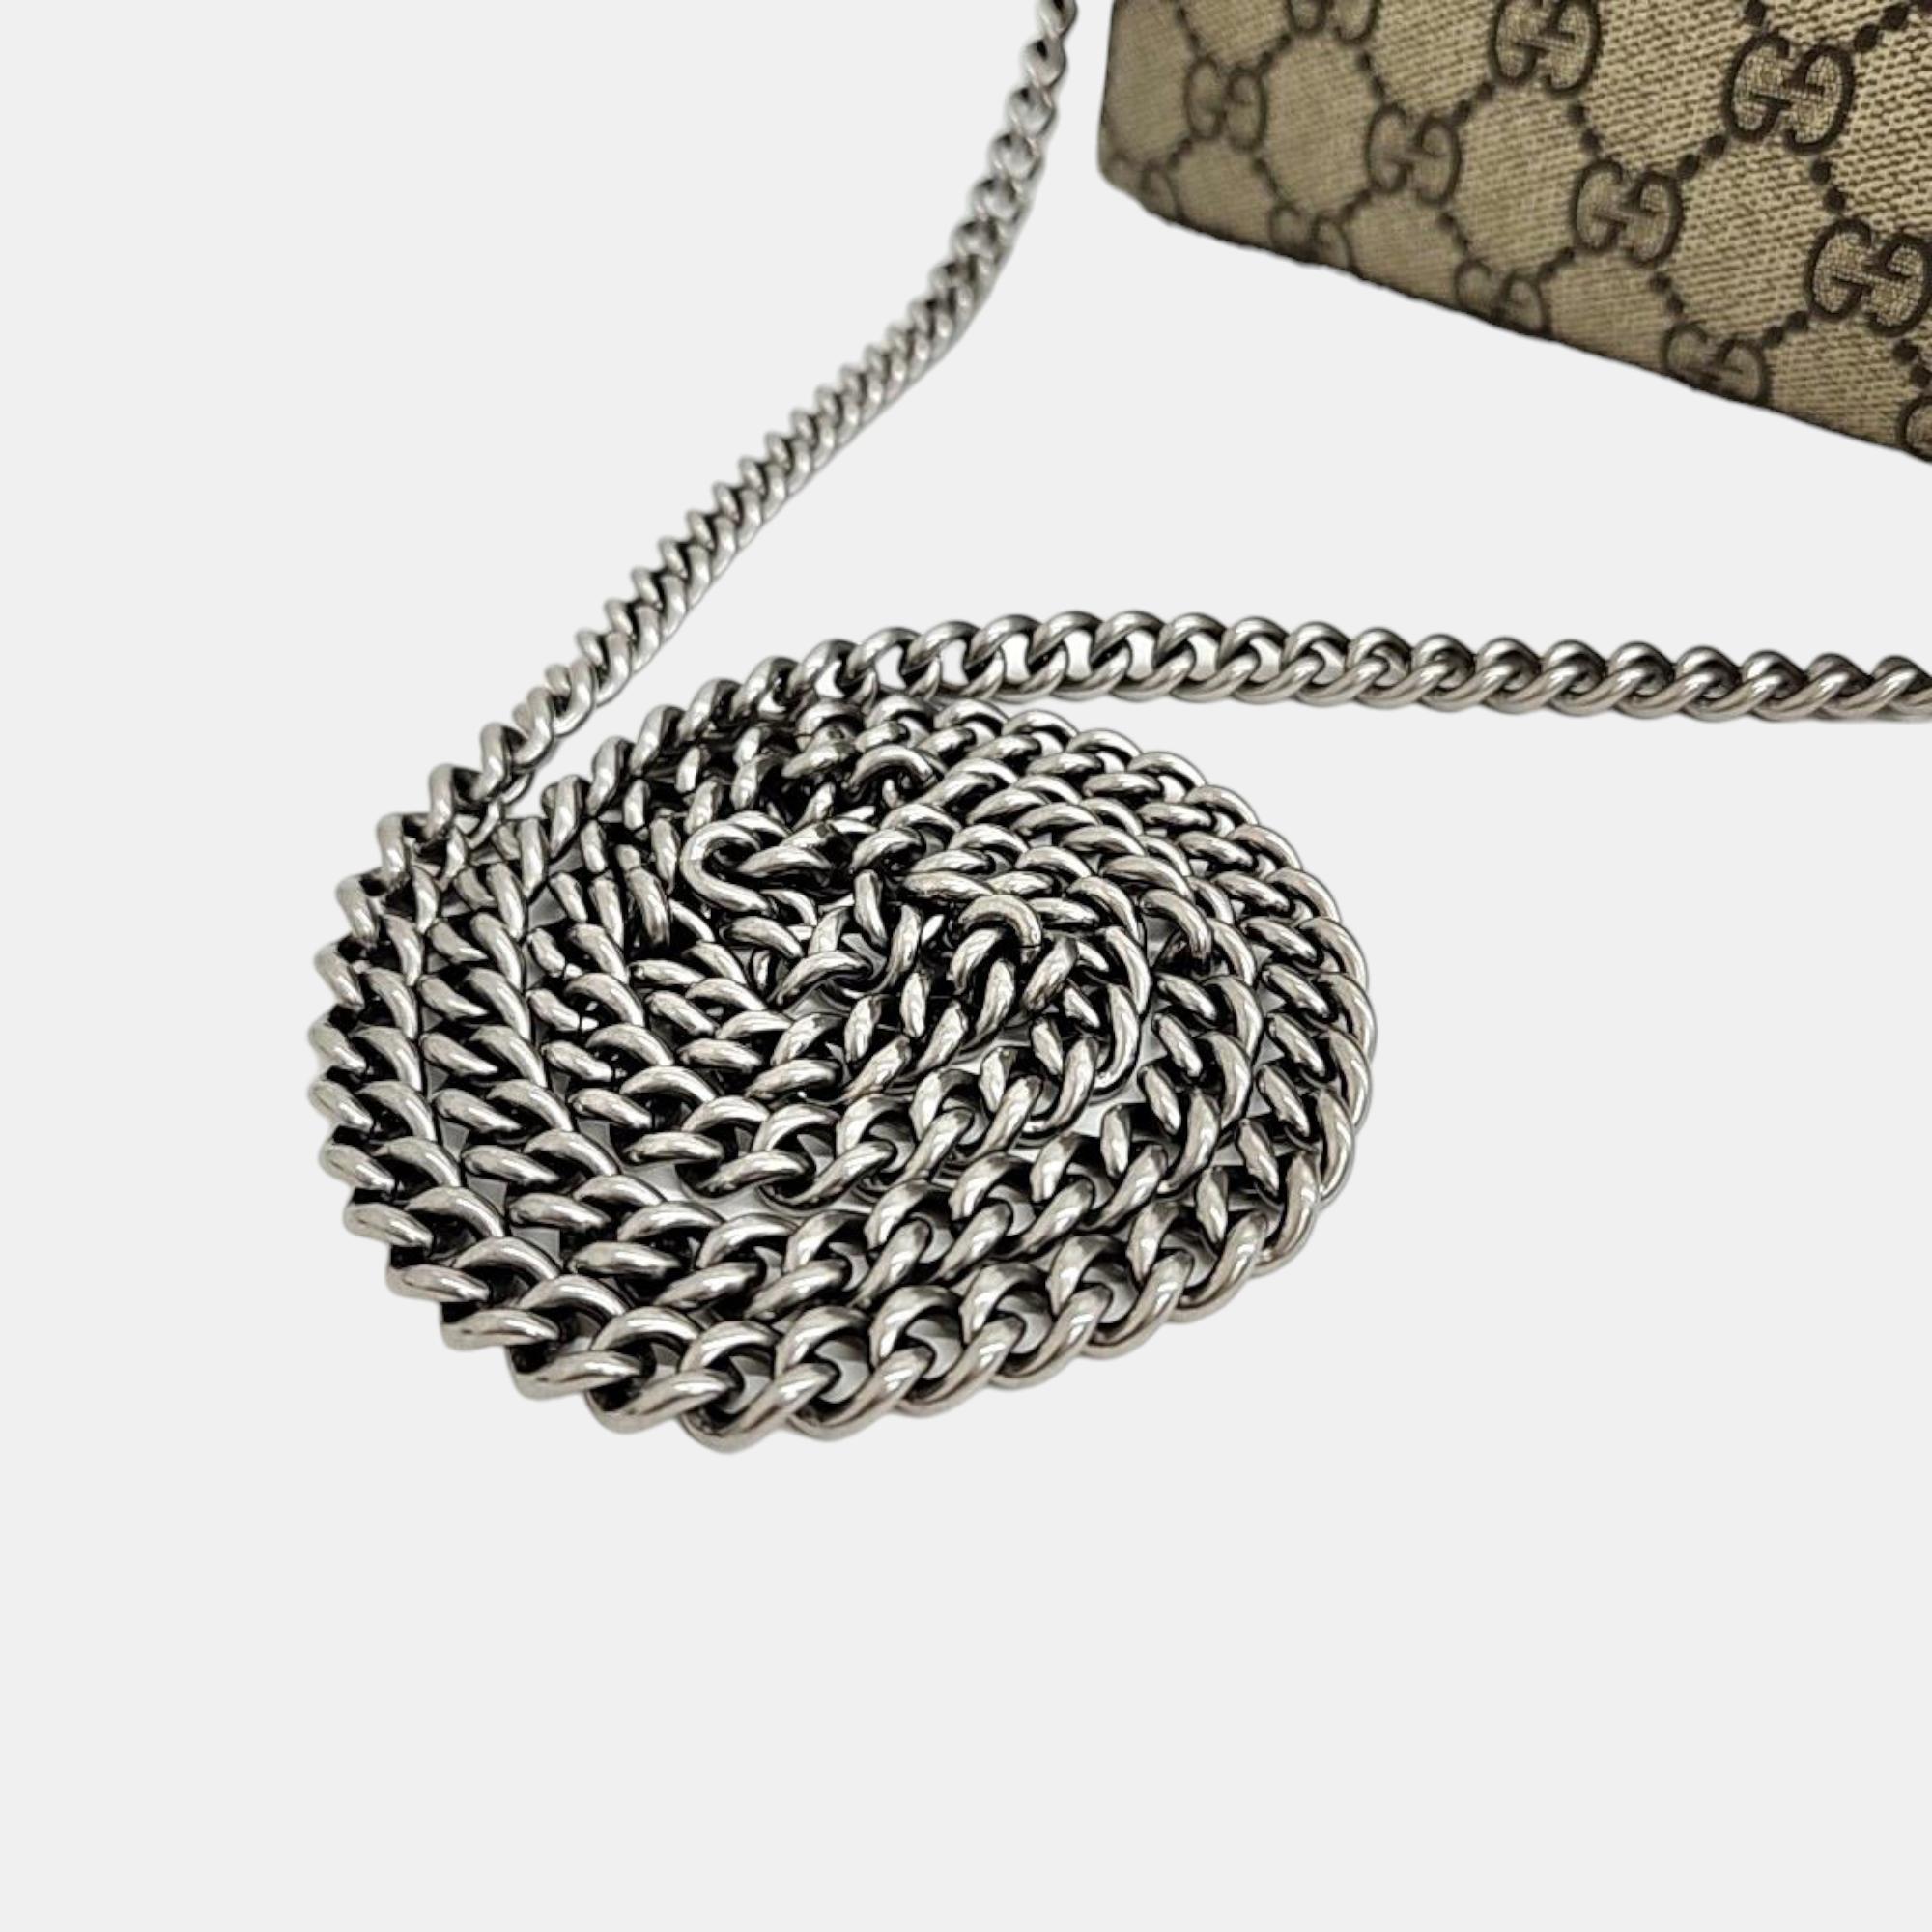 Gucci Dionysus Mini Chain Bag (401231)